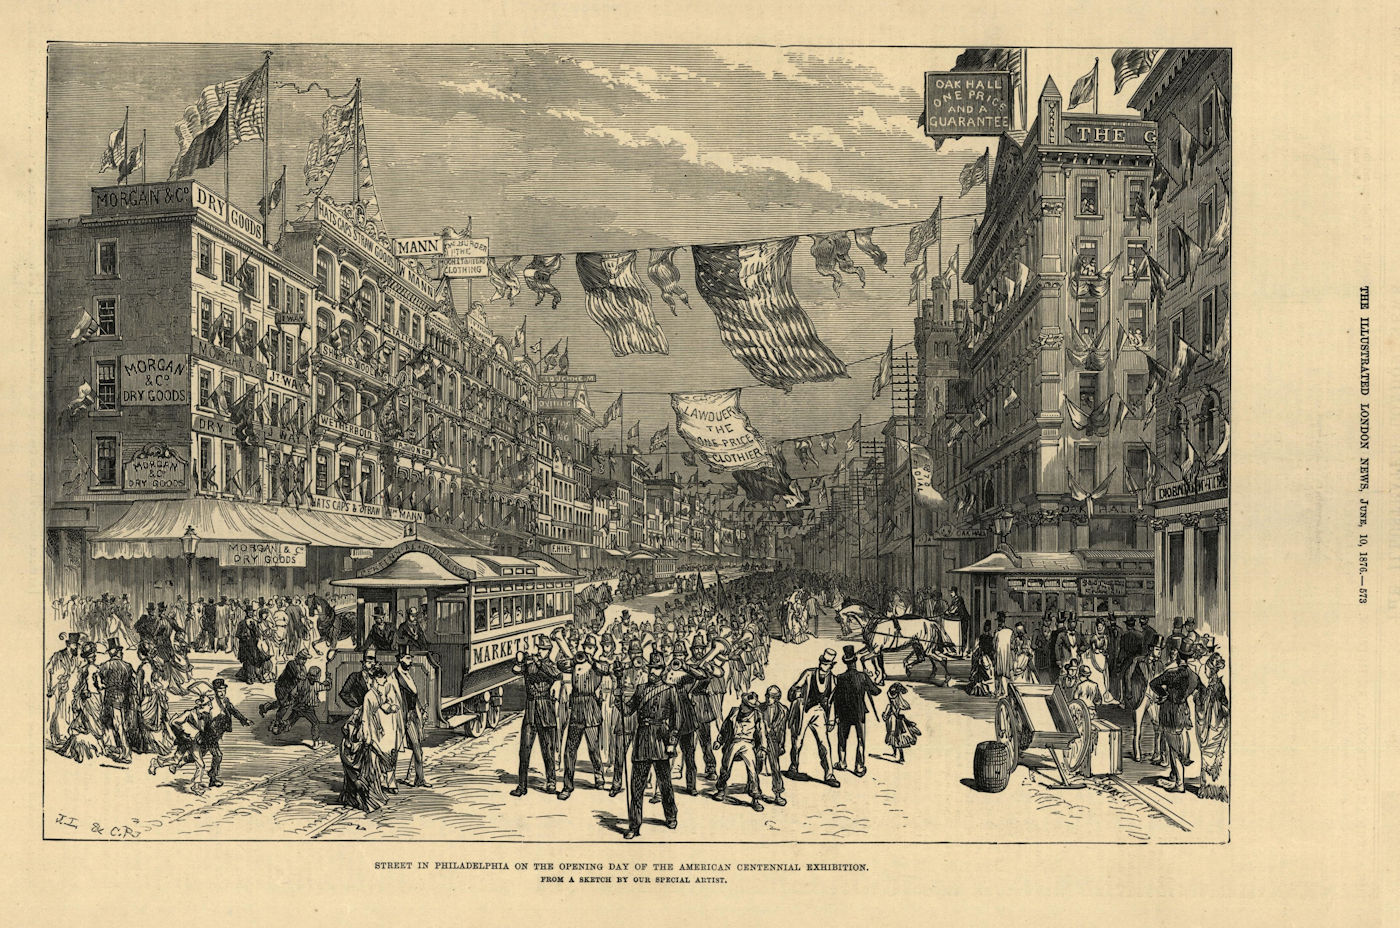 A Philadelphia street, American Centennial Exhibition opening day 1876 print